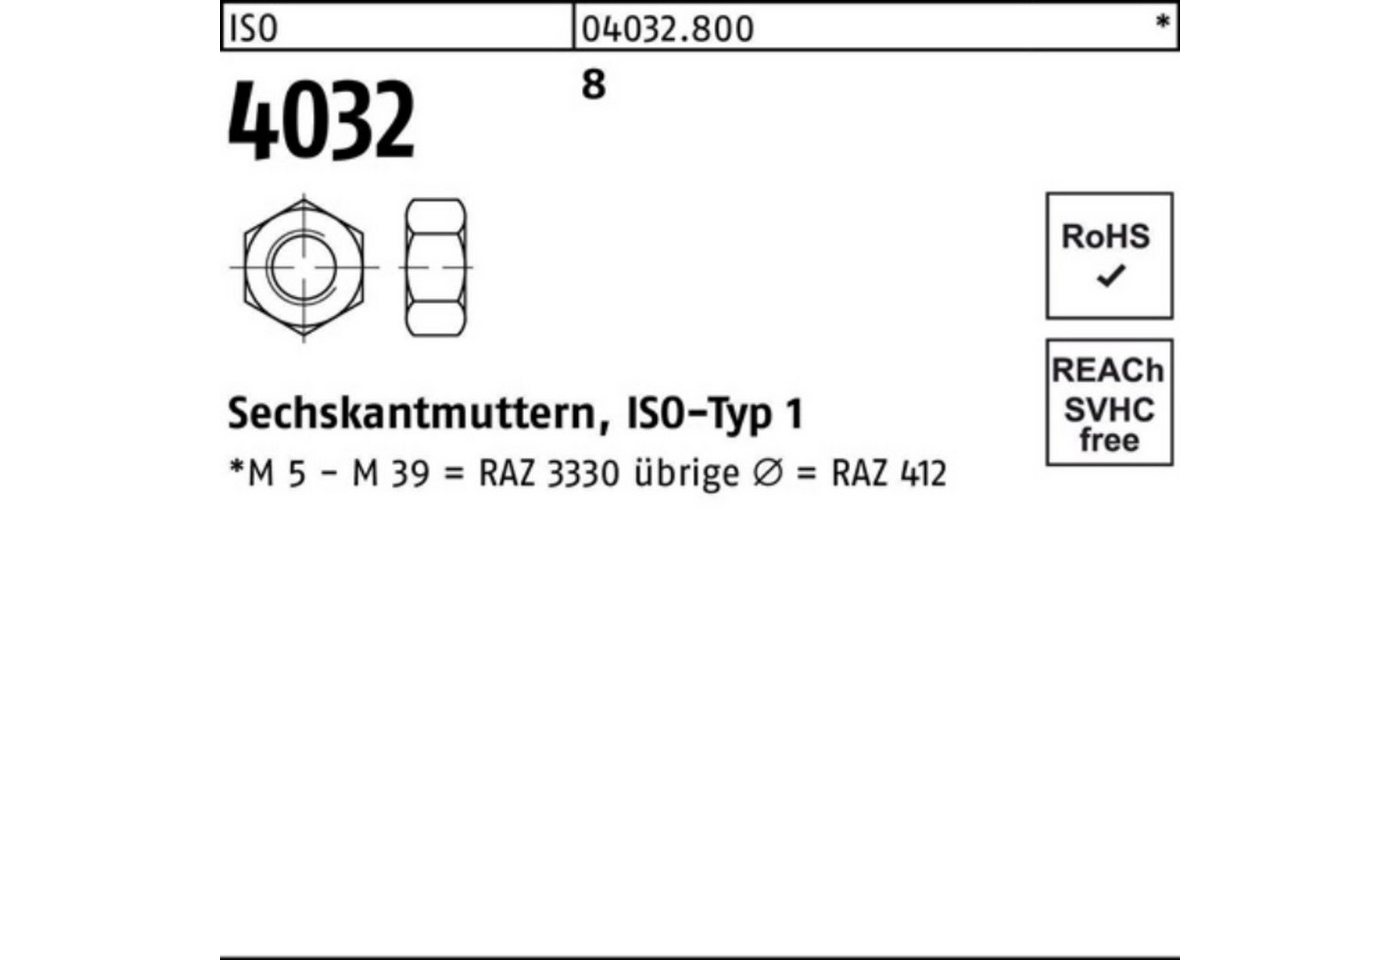 Bufab Muttern 100er Pack Sechskantmutter ISO 4032 M24 8 50 Stück ISO 4032 8 Sechska von Bufab